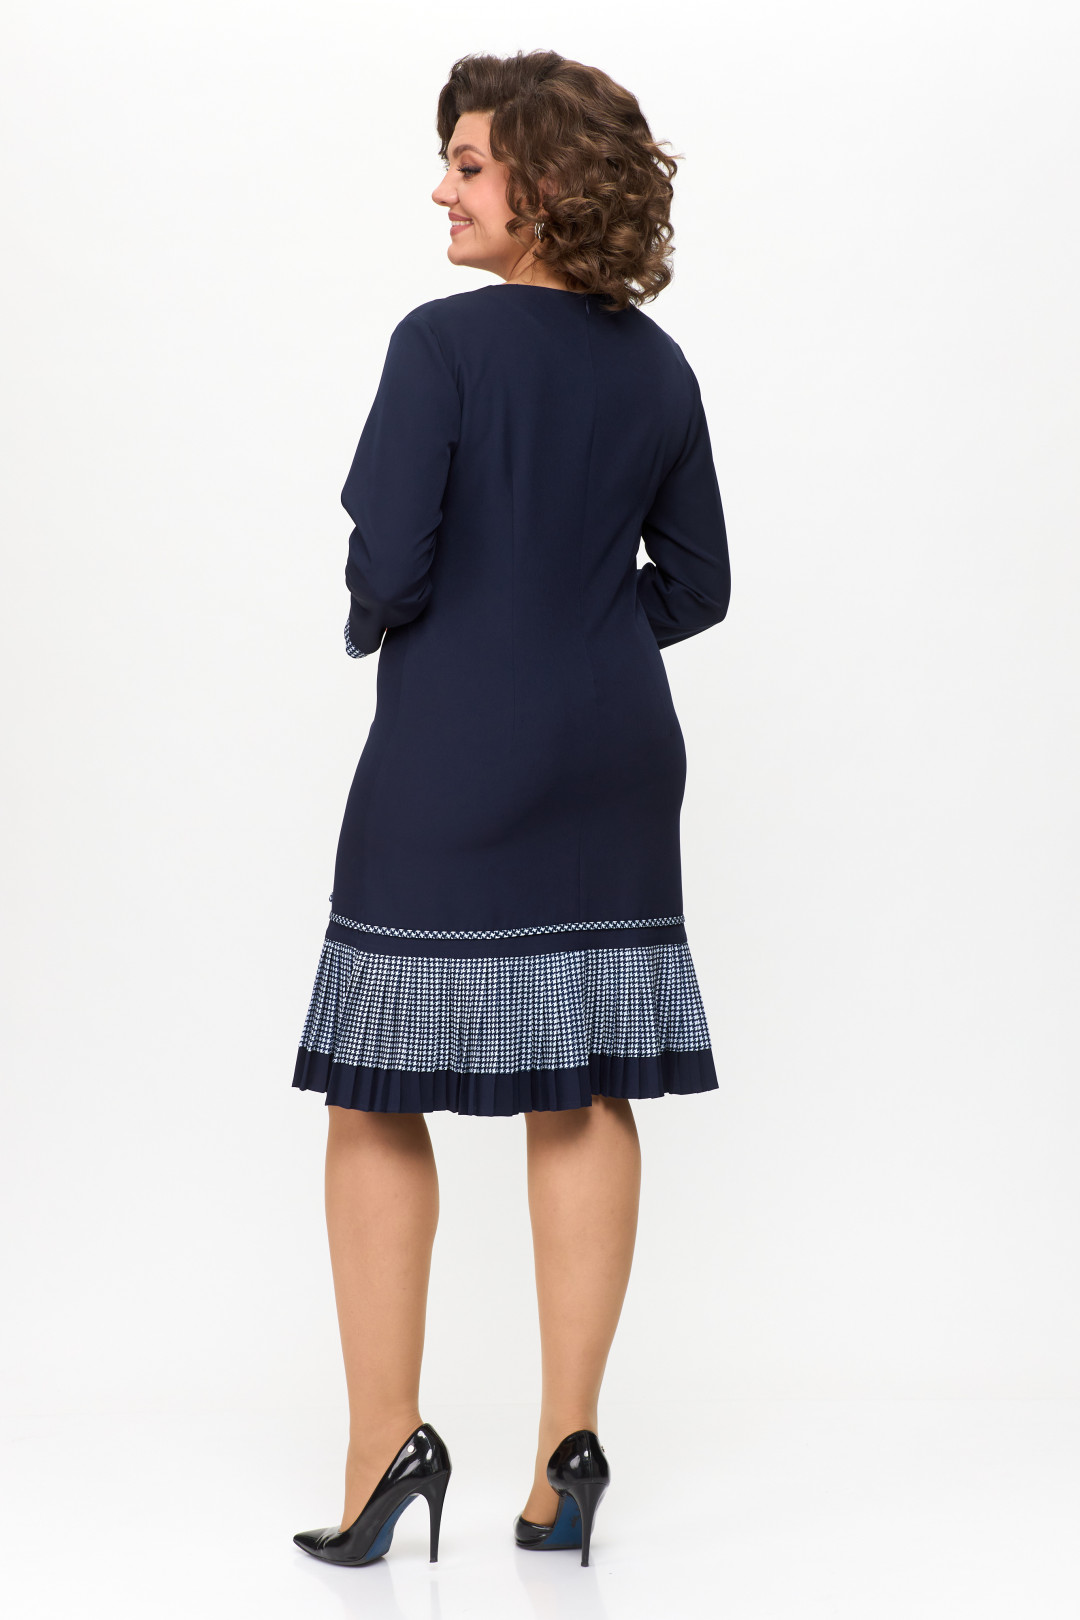 Платье Мода-Версаль 2233 т.синий